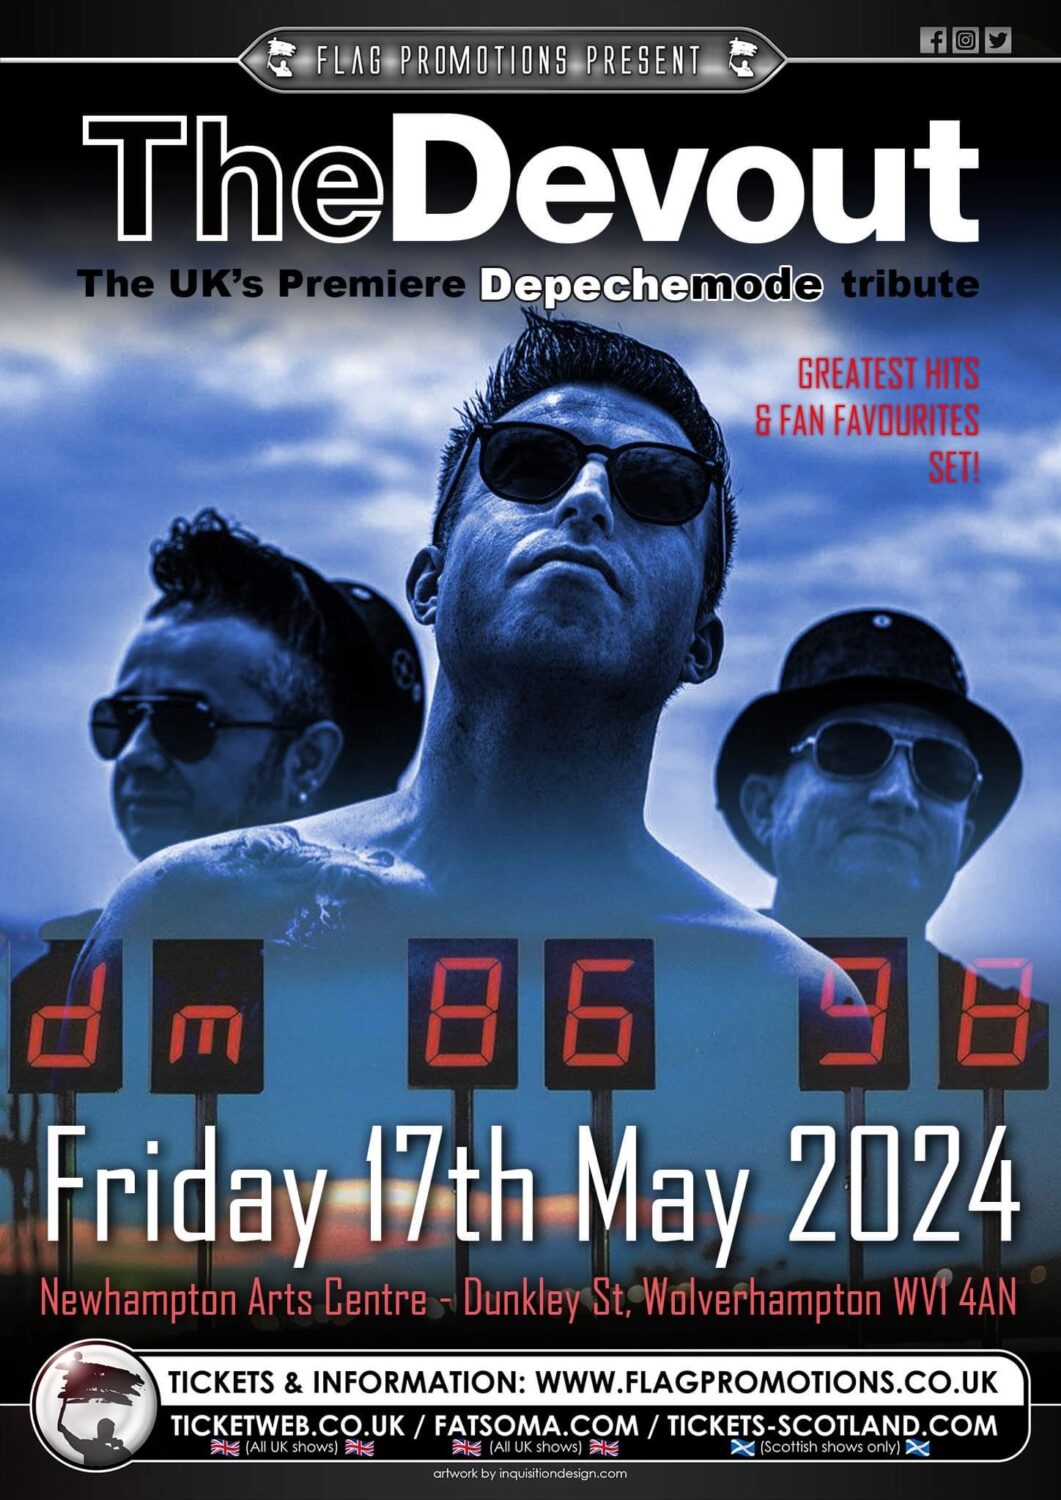 The devout live in wolverhampton tour poster